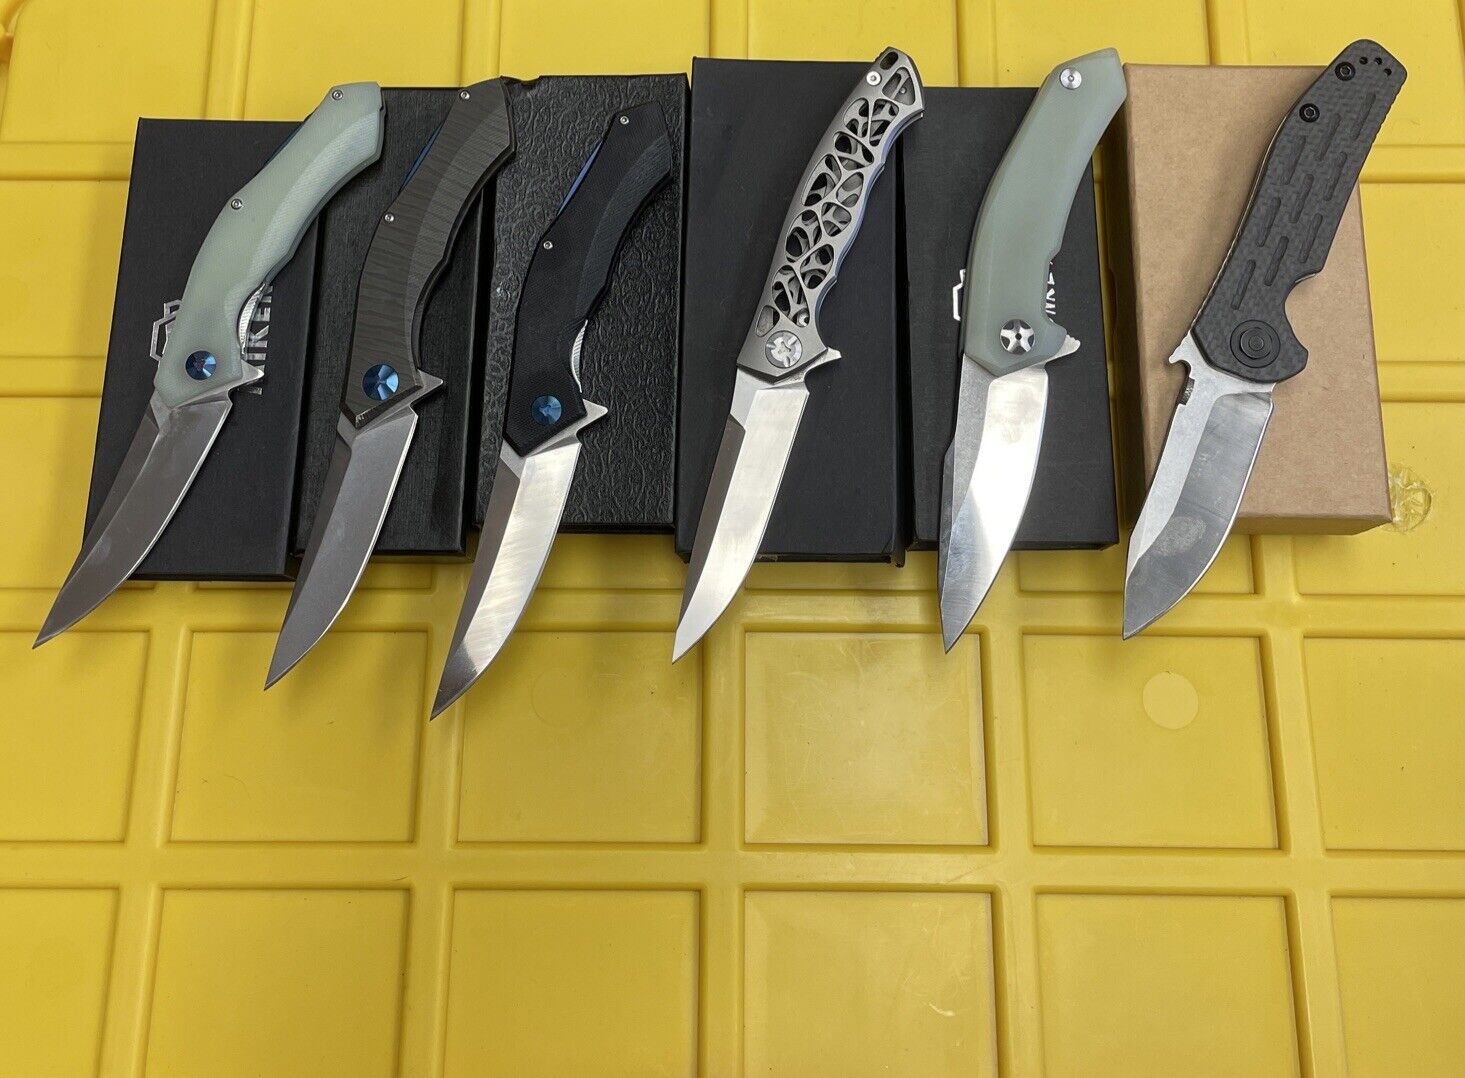 Lot of 6 Knives / CLONE - Look-a-like, Zero Tolerance design knives